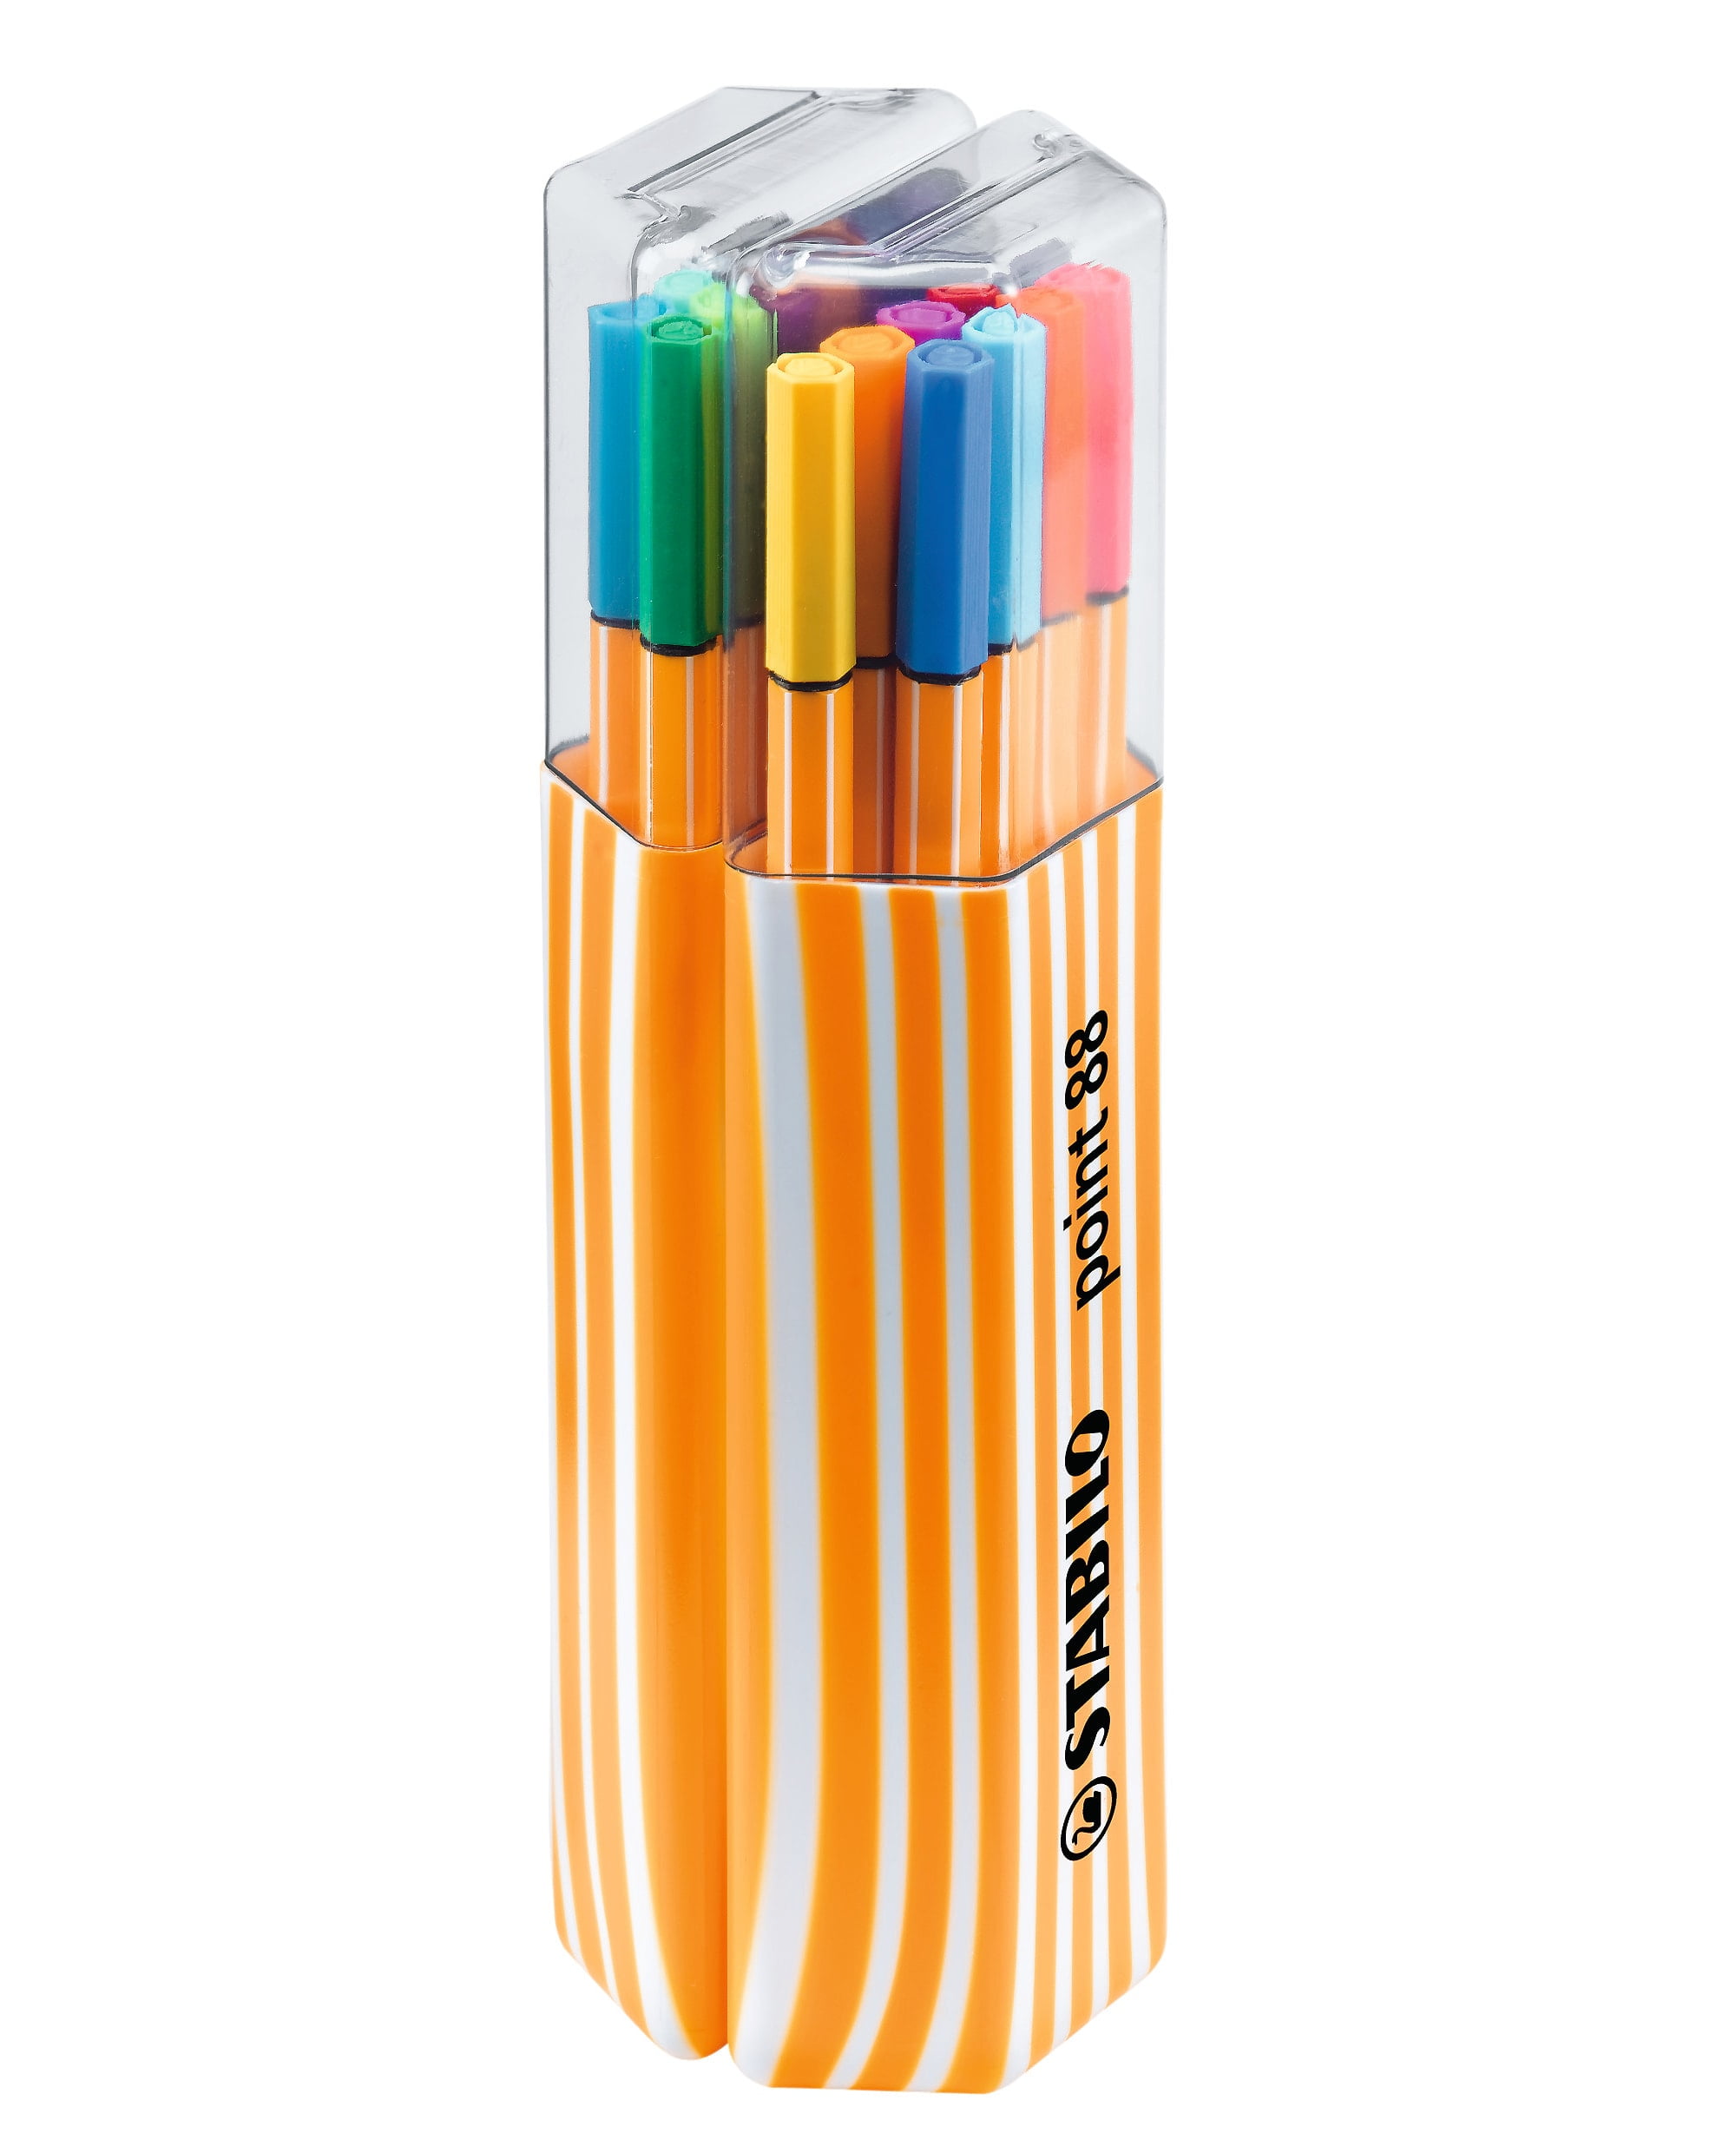 Stabilo Fine Point Colored Pen Set - Stabilo Pens